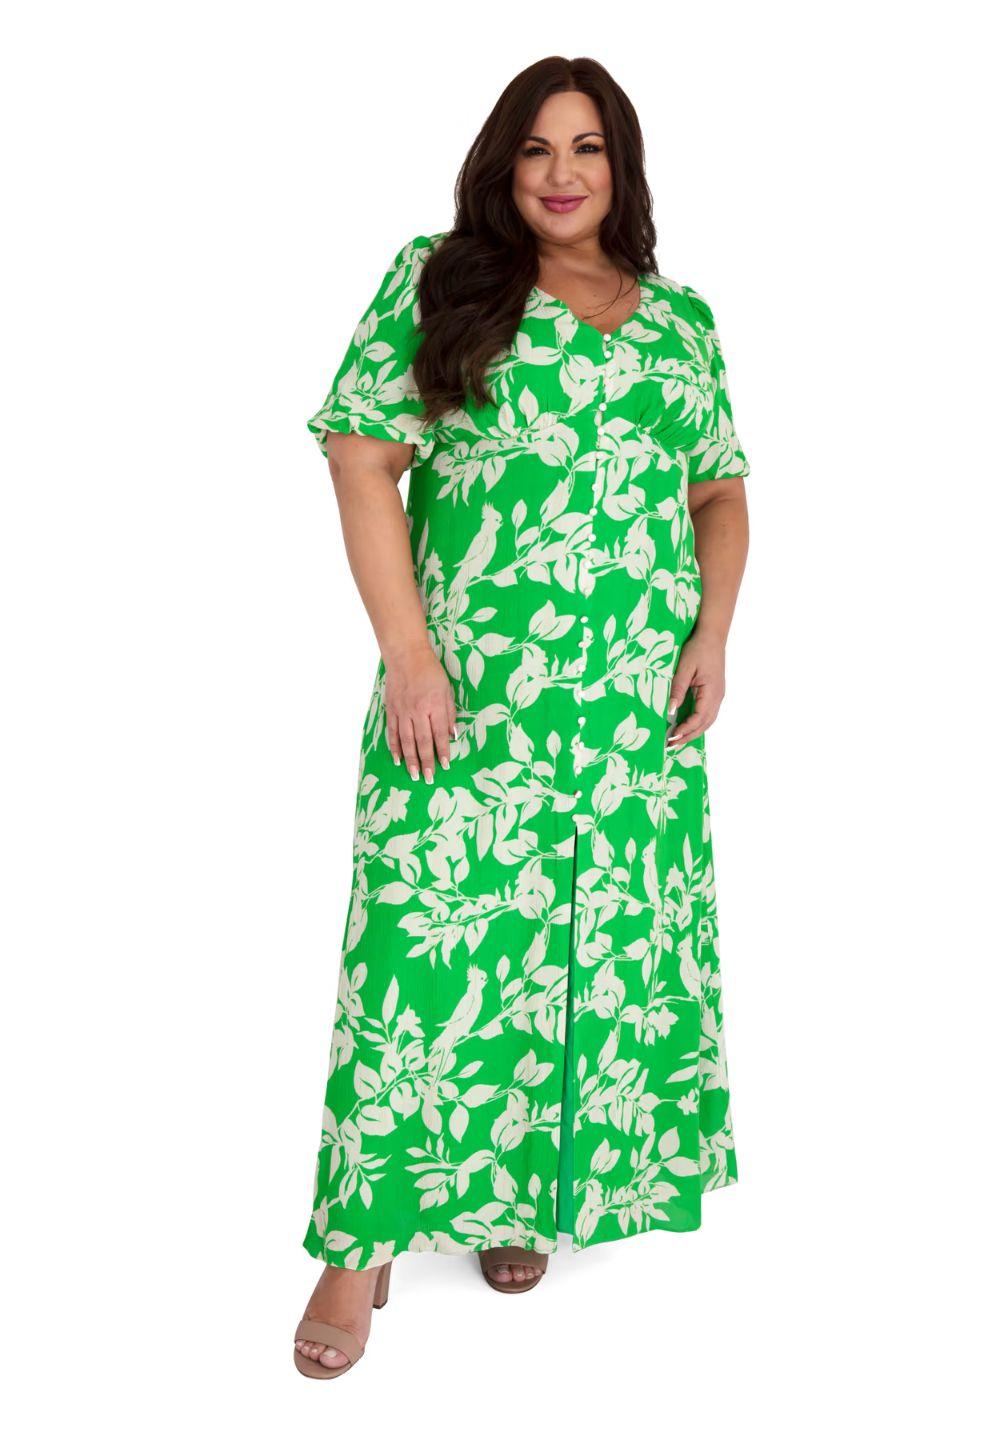 Maree Pour Toi Green Floral Maxi Dress, Size 20